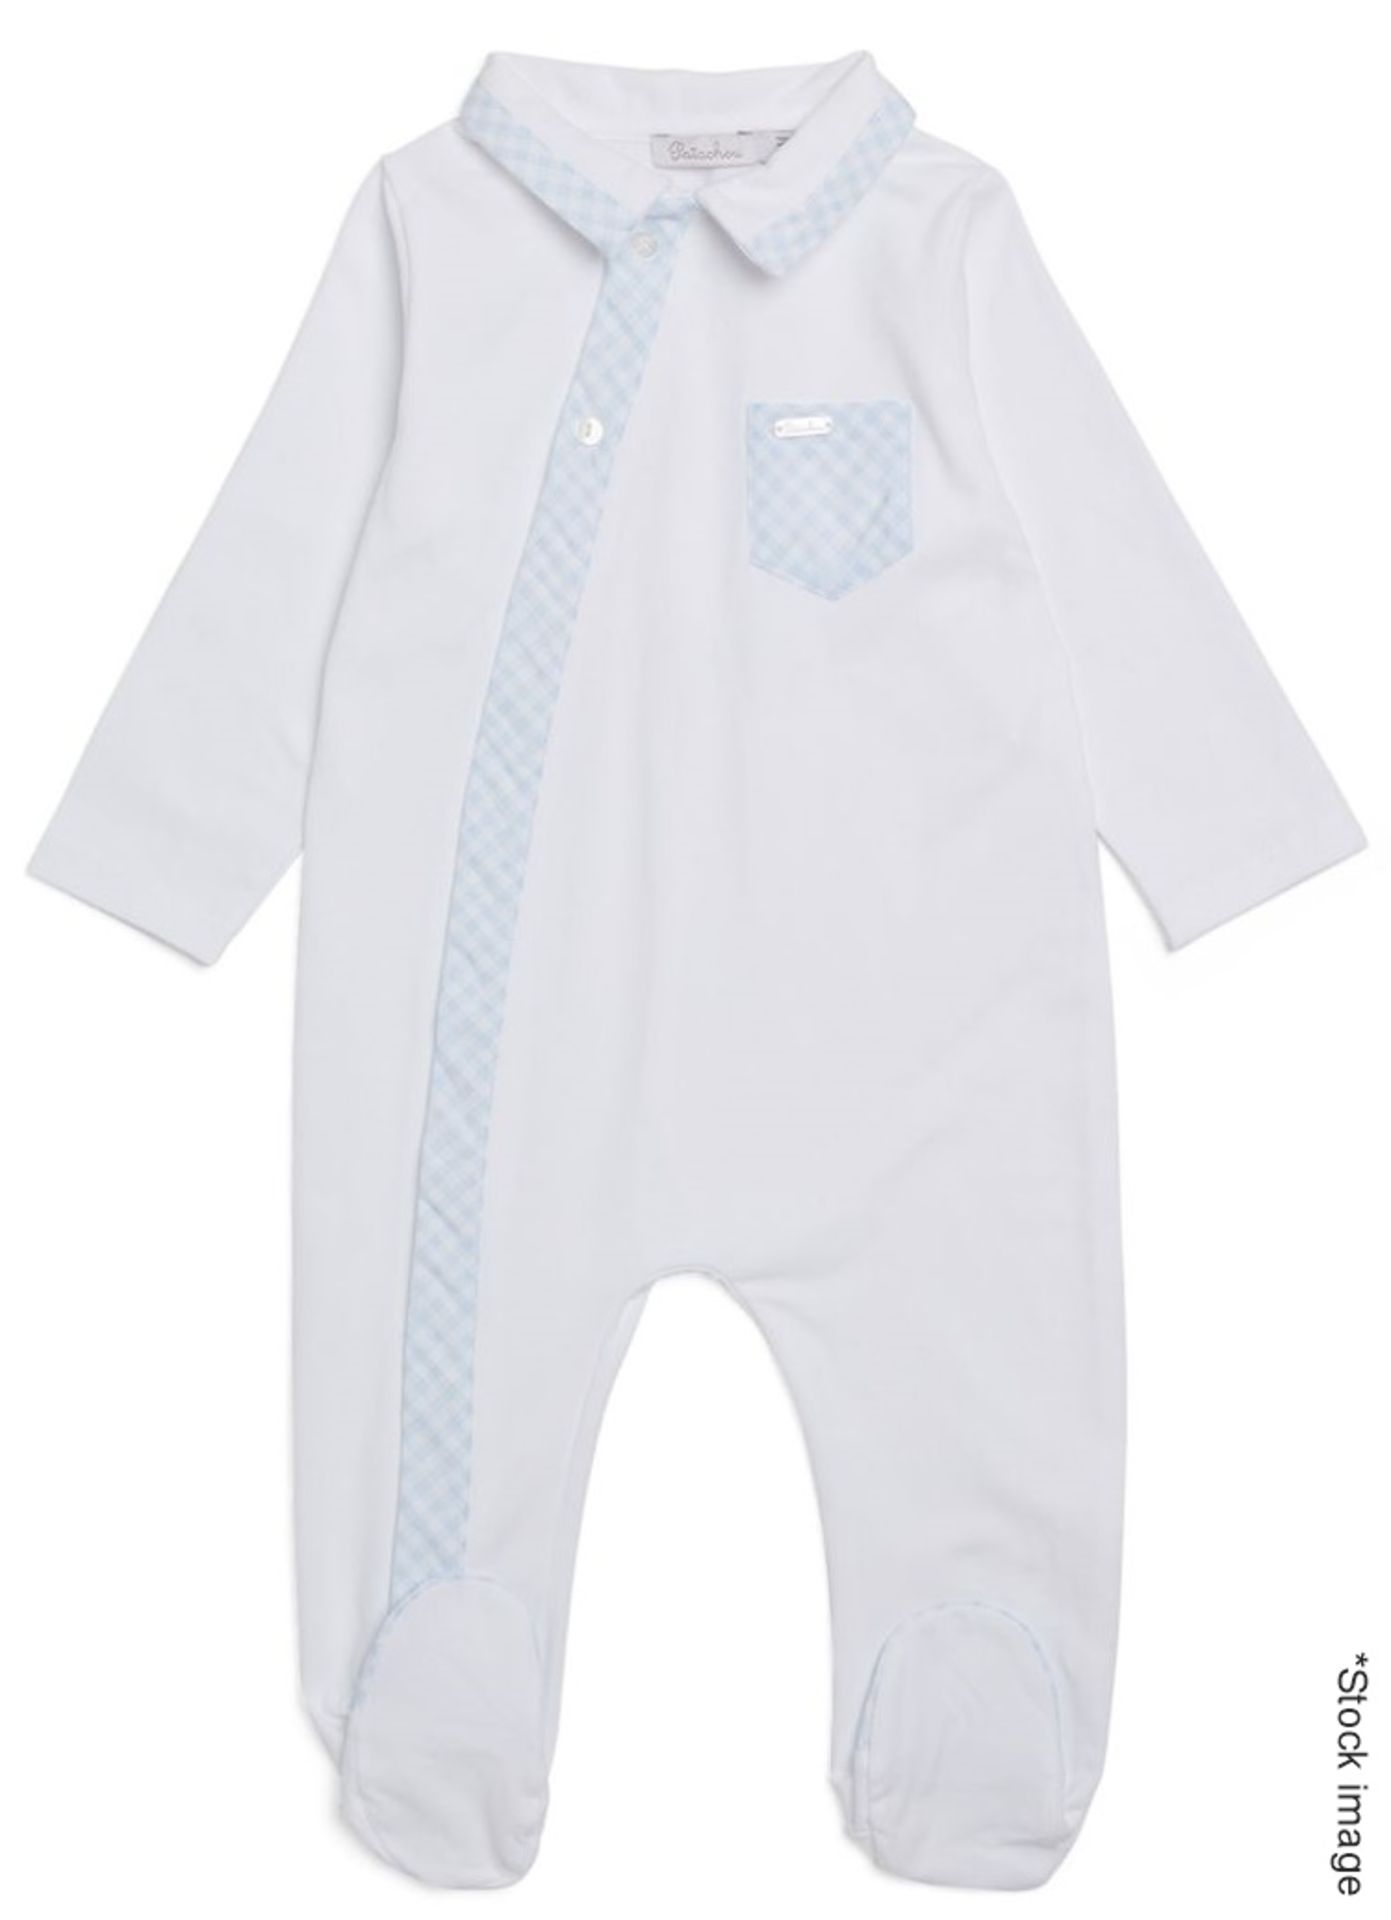 1 x PATACHOU Blue Check Babygrow, 18 Months - Original Price £54.95 *Read Condition Report*